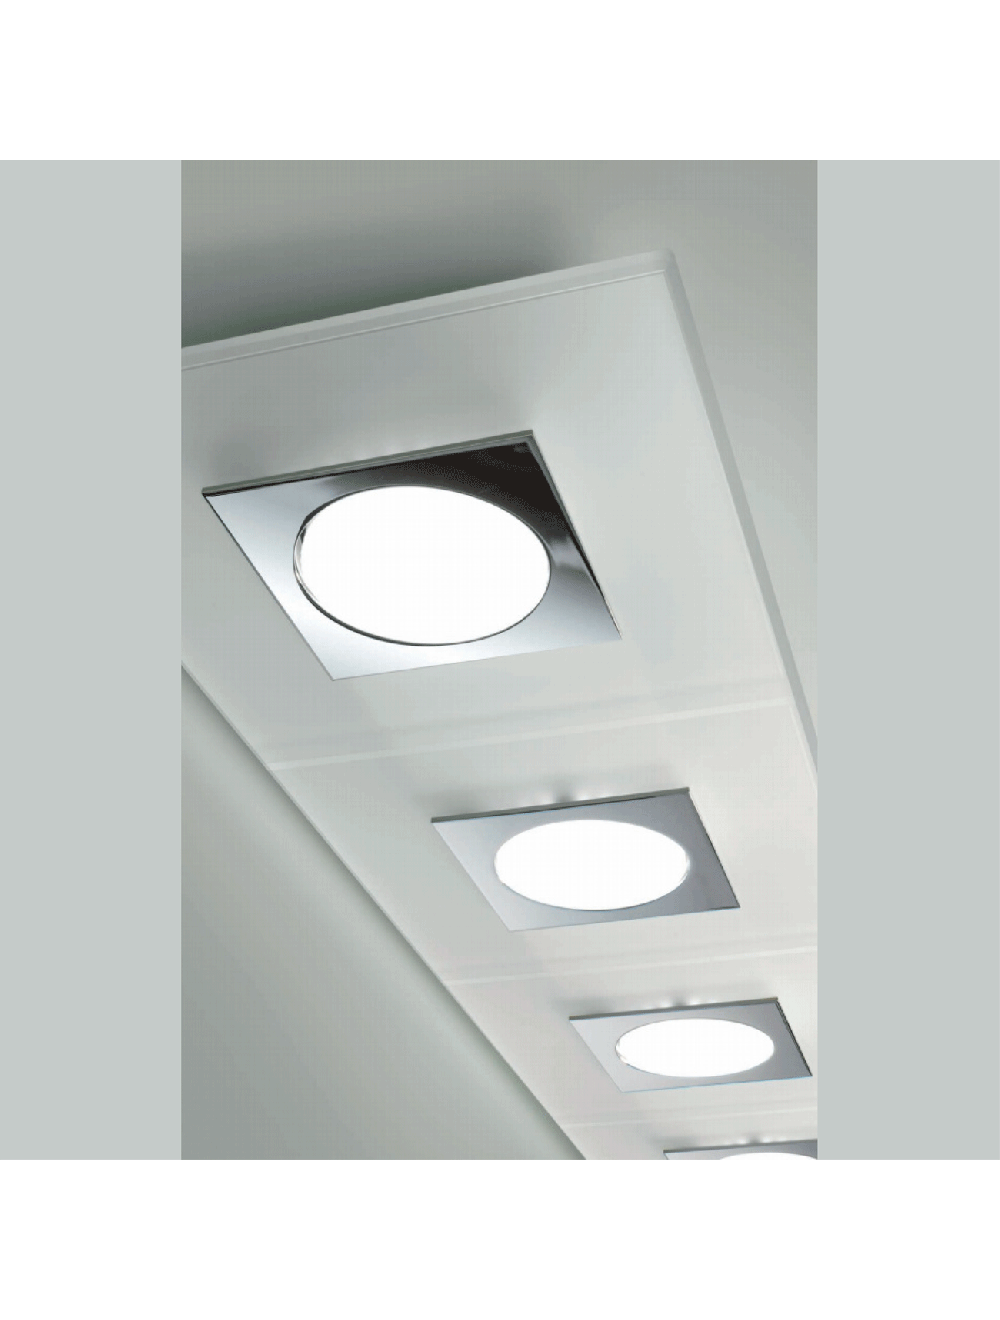 KLARO 04005 rechteckige LED-Deckenlampe in 100 cm Länge